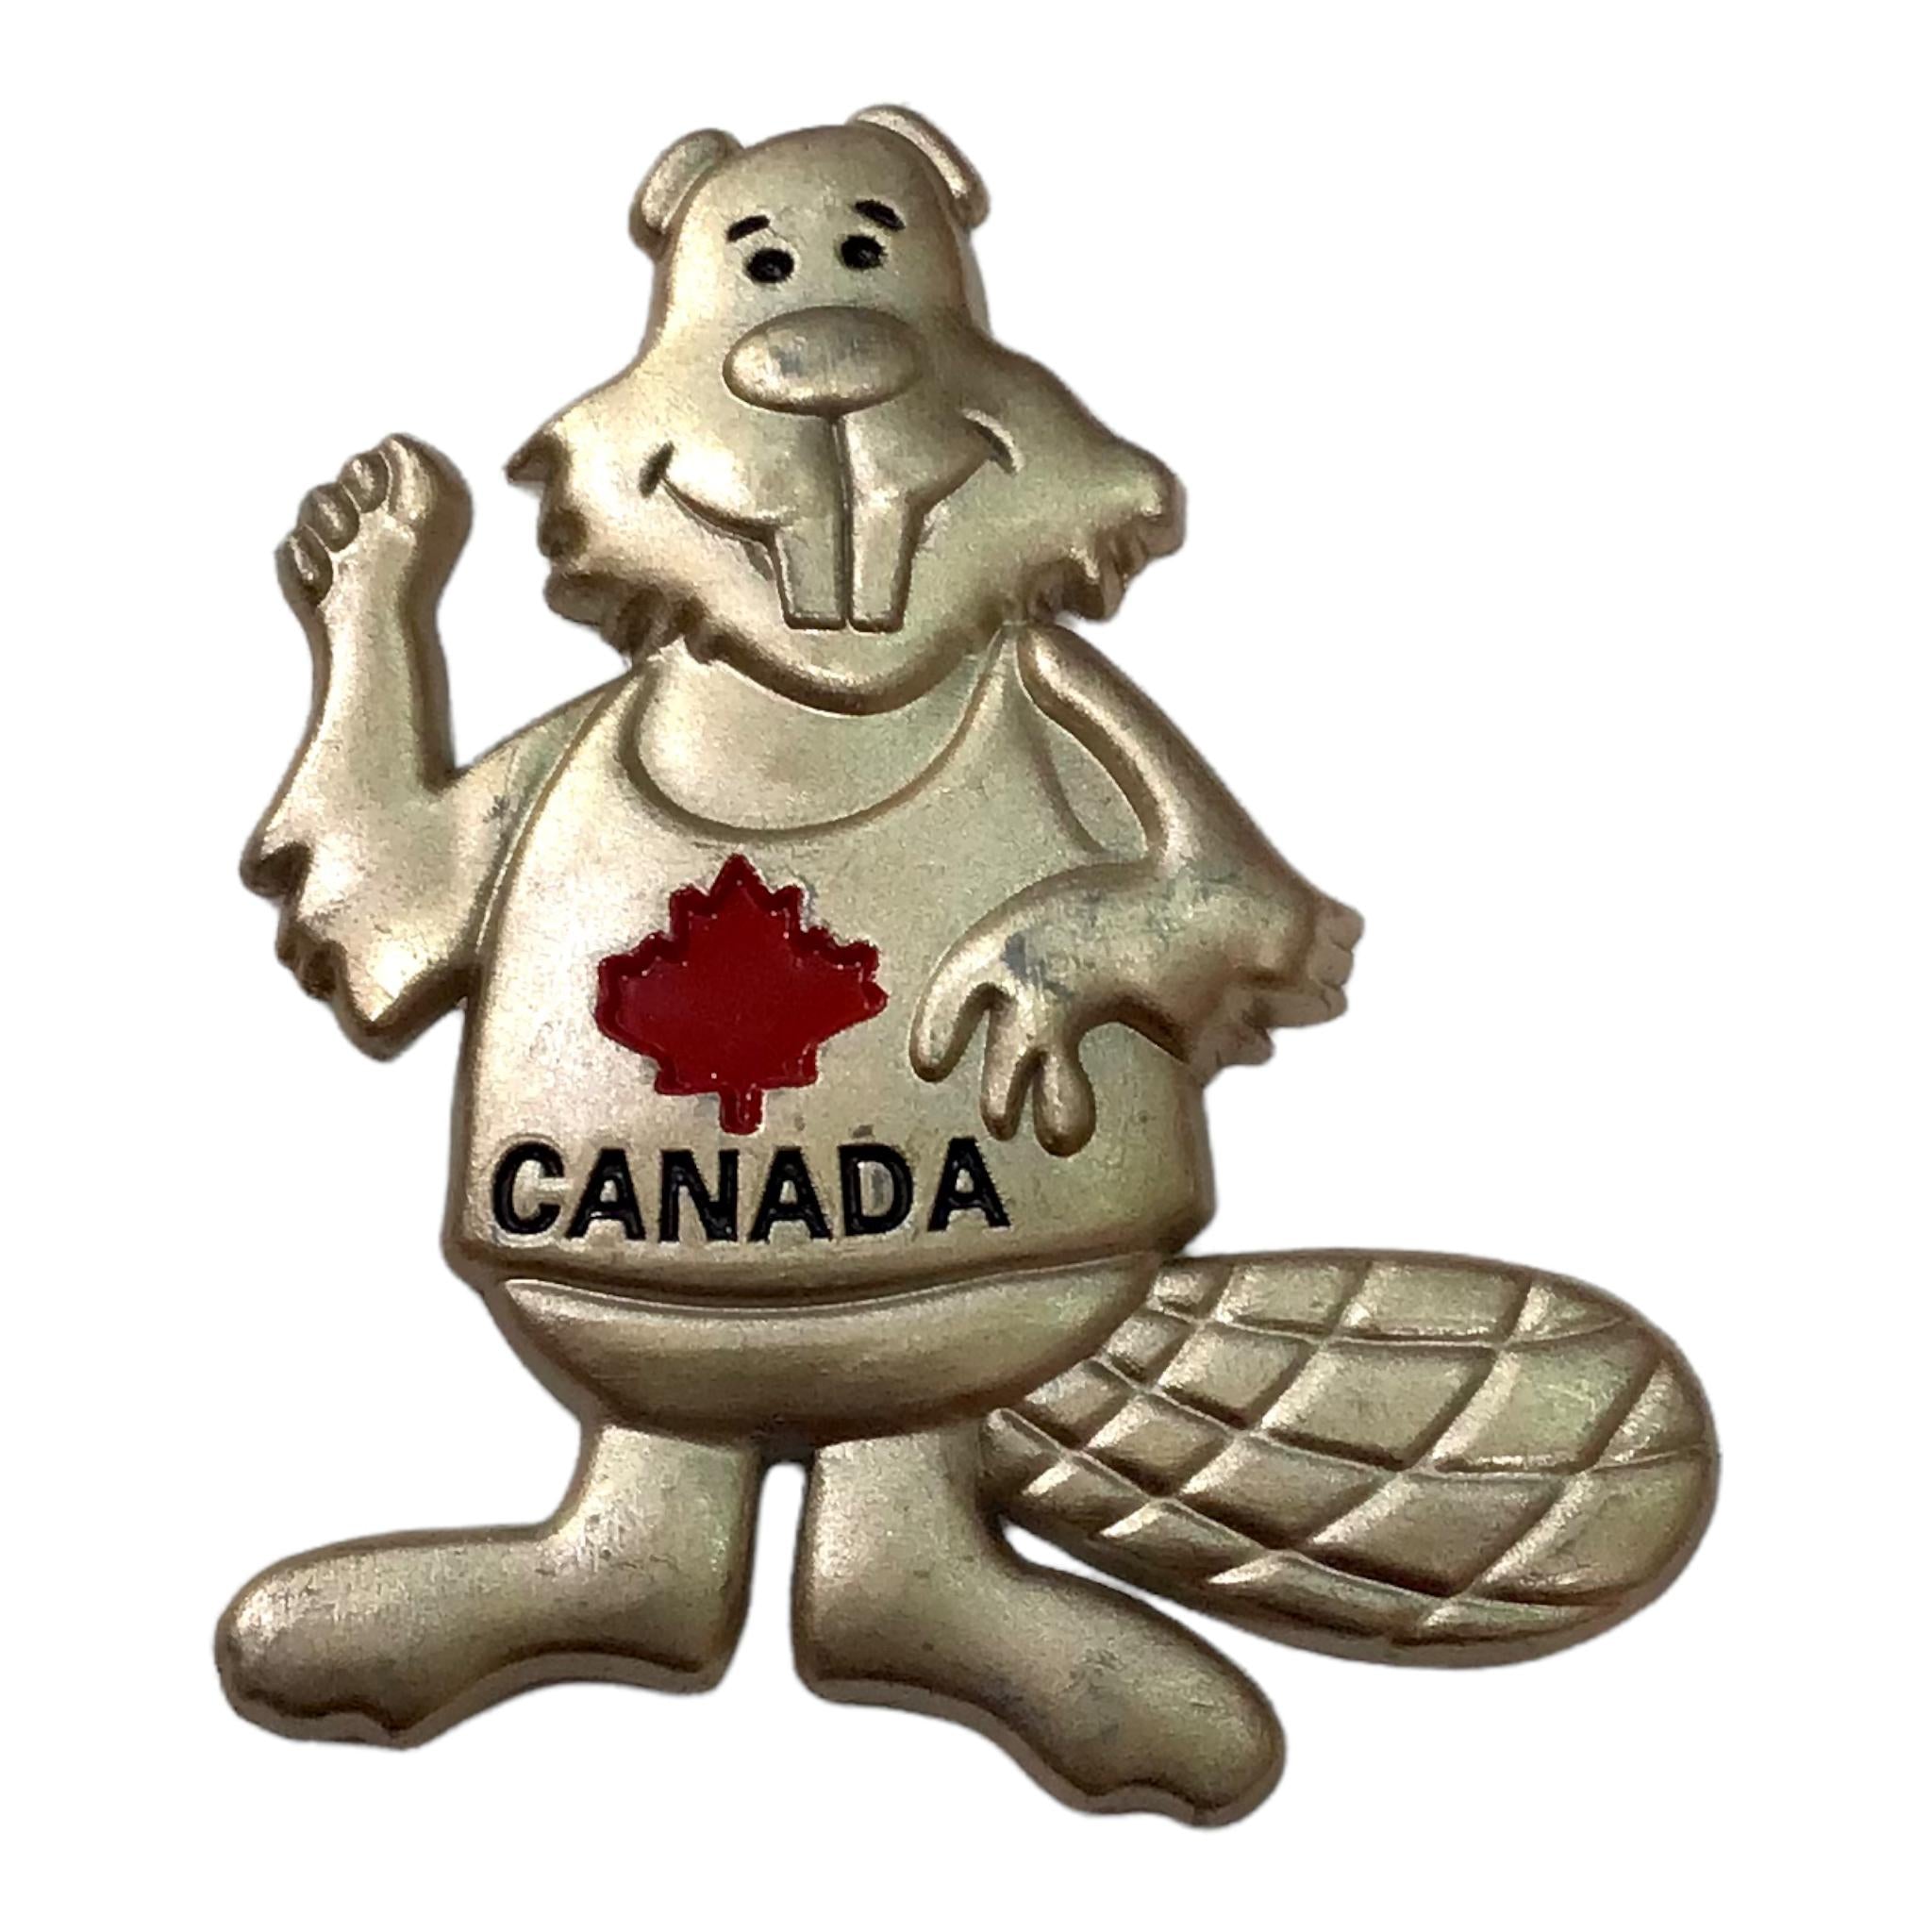 Canada beaver fridge magnet silver tone metal DieCast